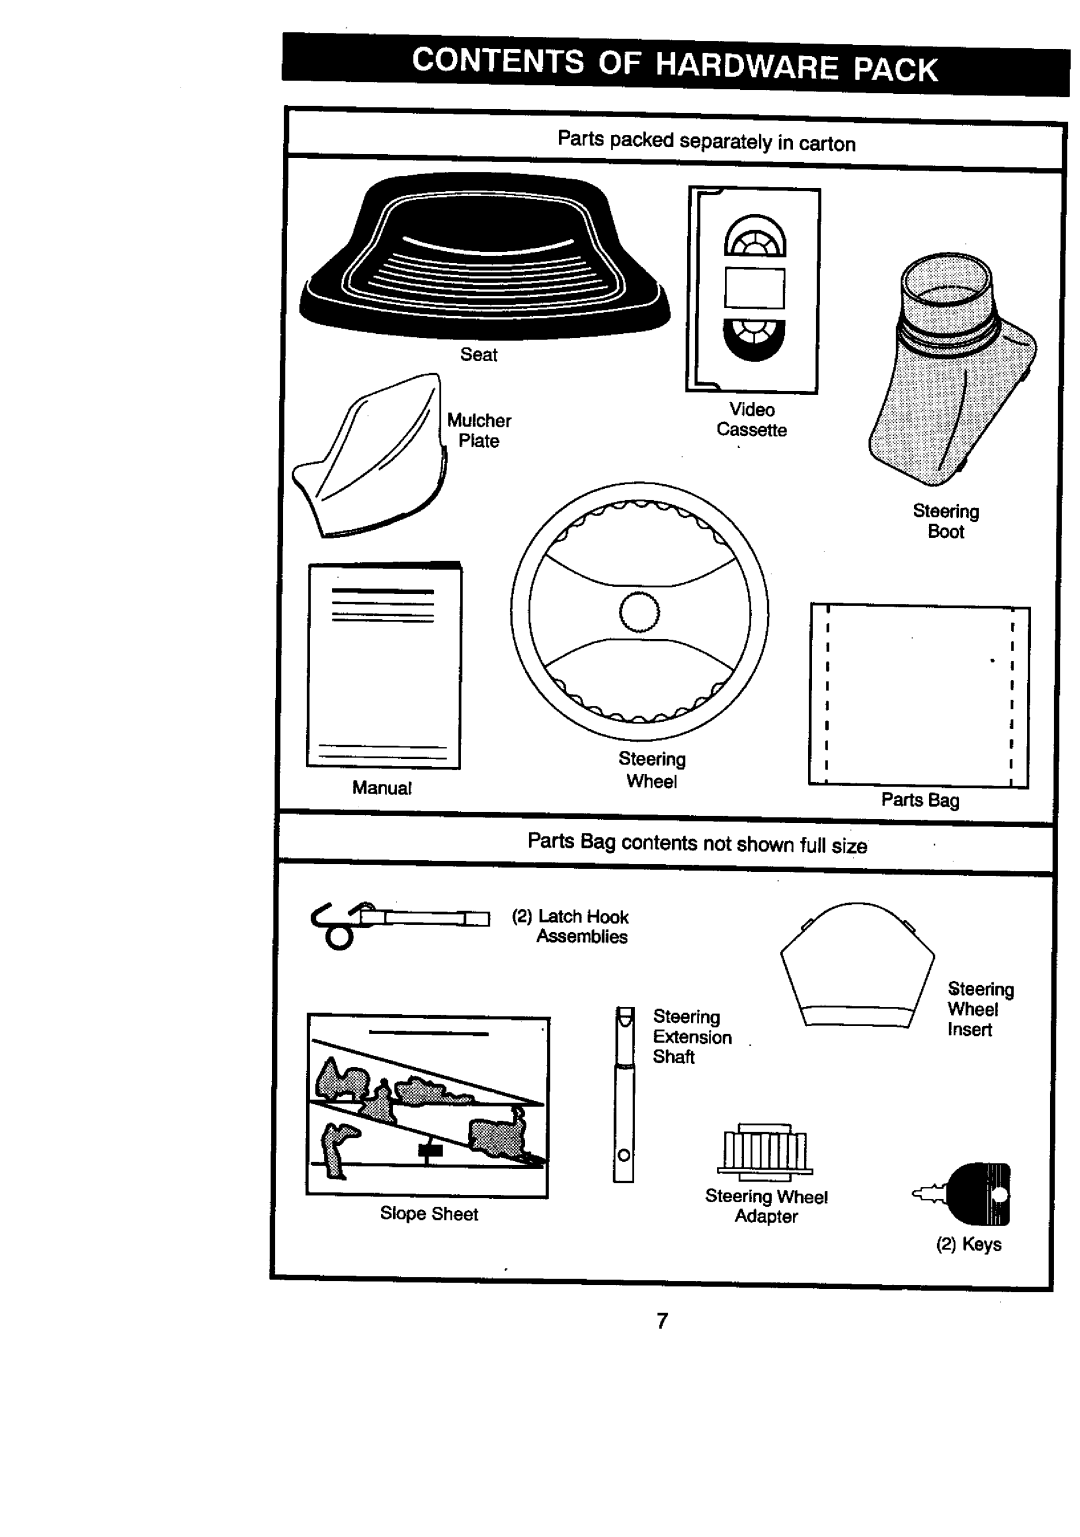 Craftsman 917.27086 Manual, Parts Bag contents not shown full size, Seat, Mulcher Plate, Slope Sheet, Video Cassette, Keys 